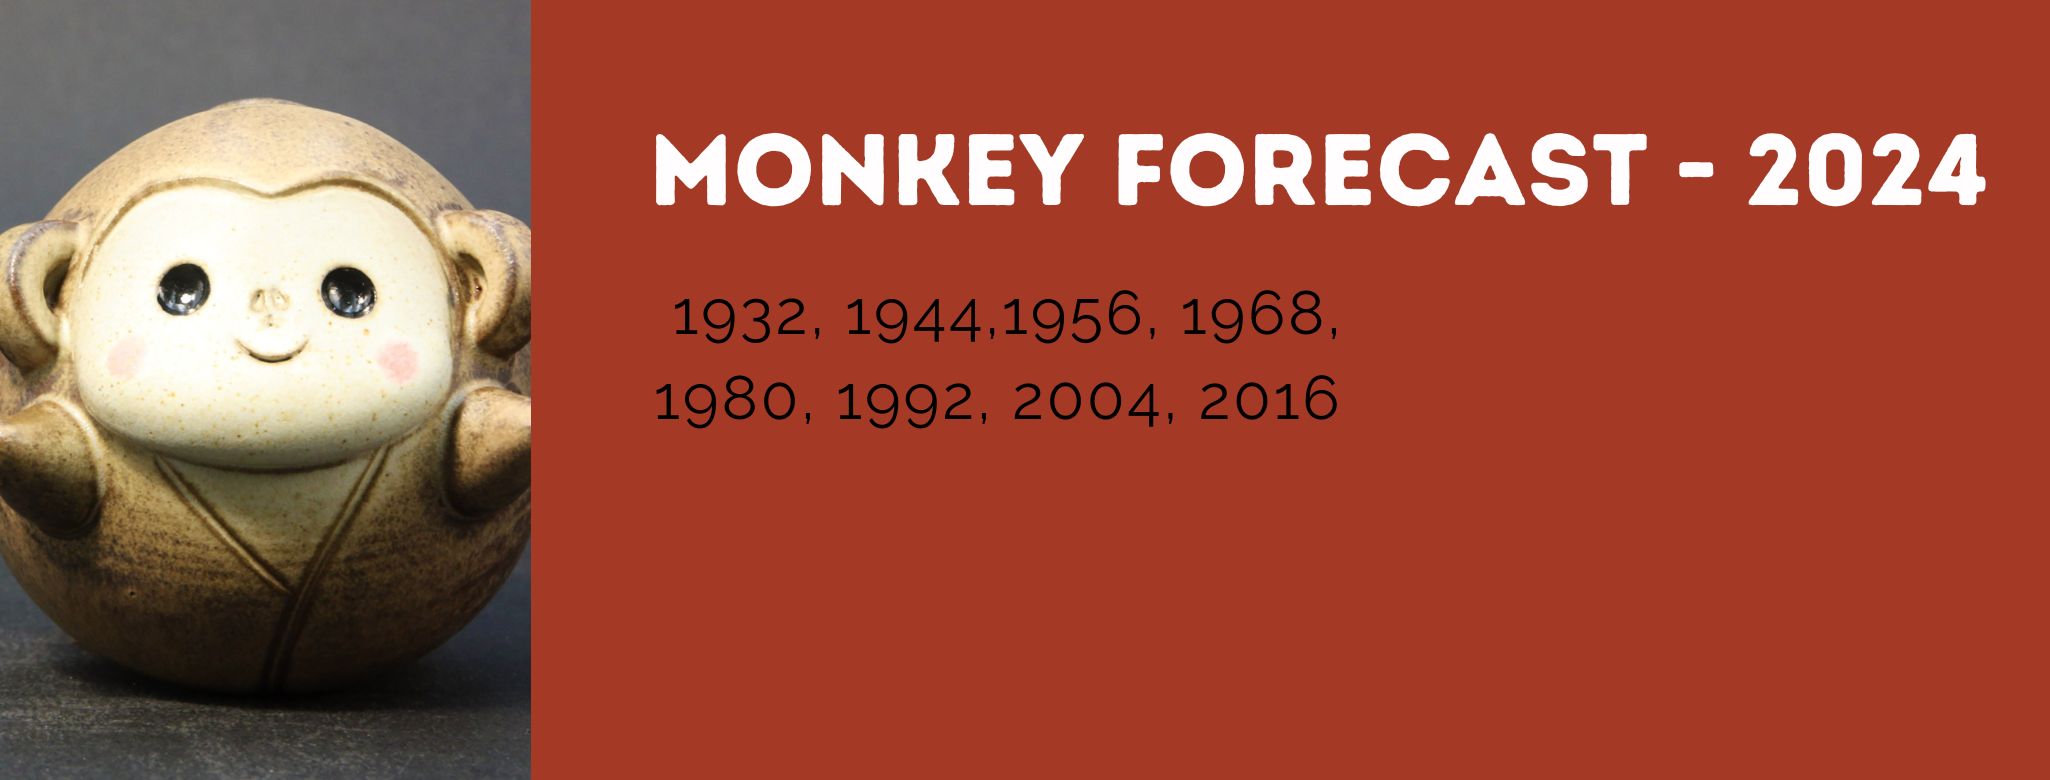 Monkey Zodiac Forecast - 2024